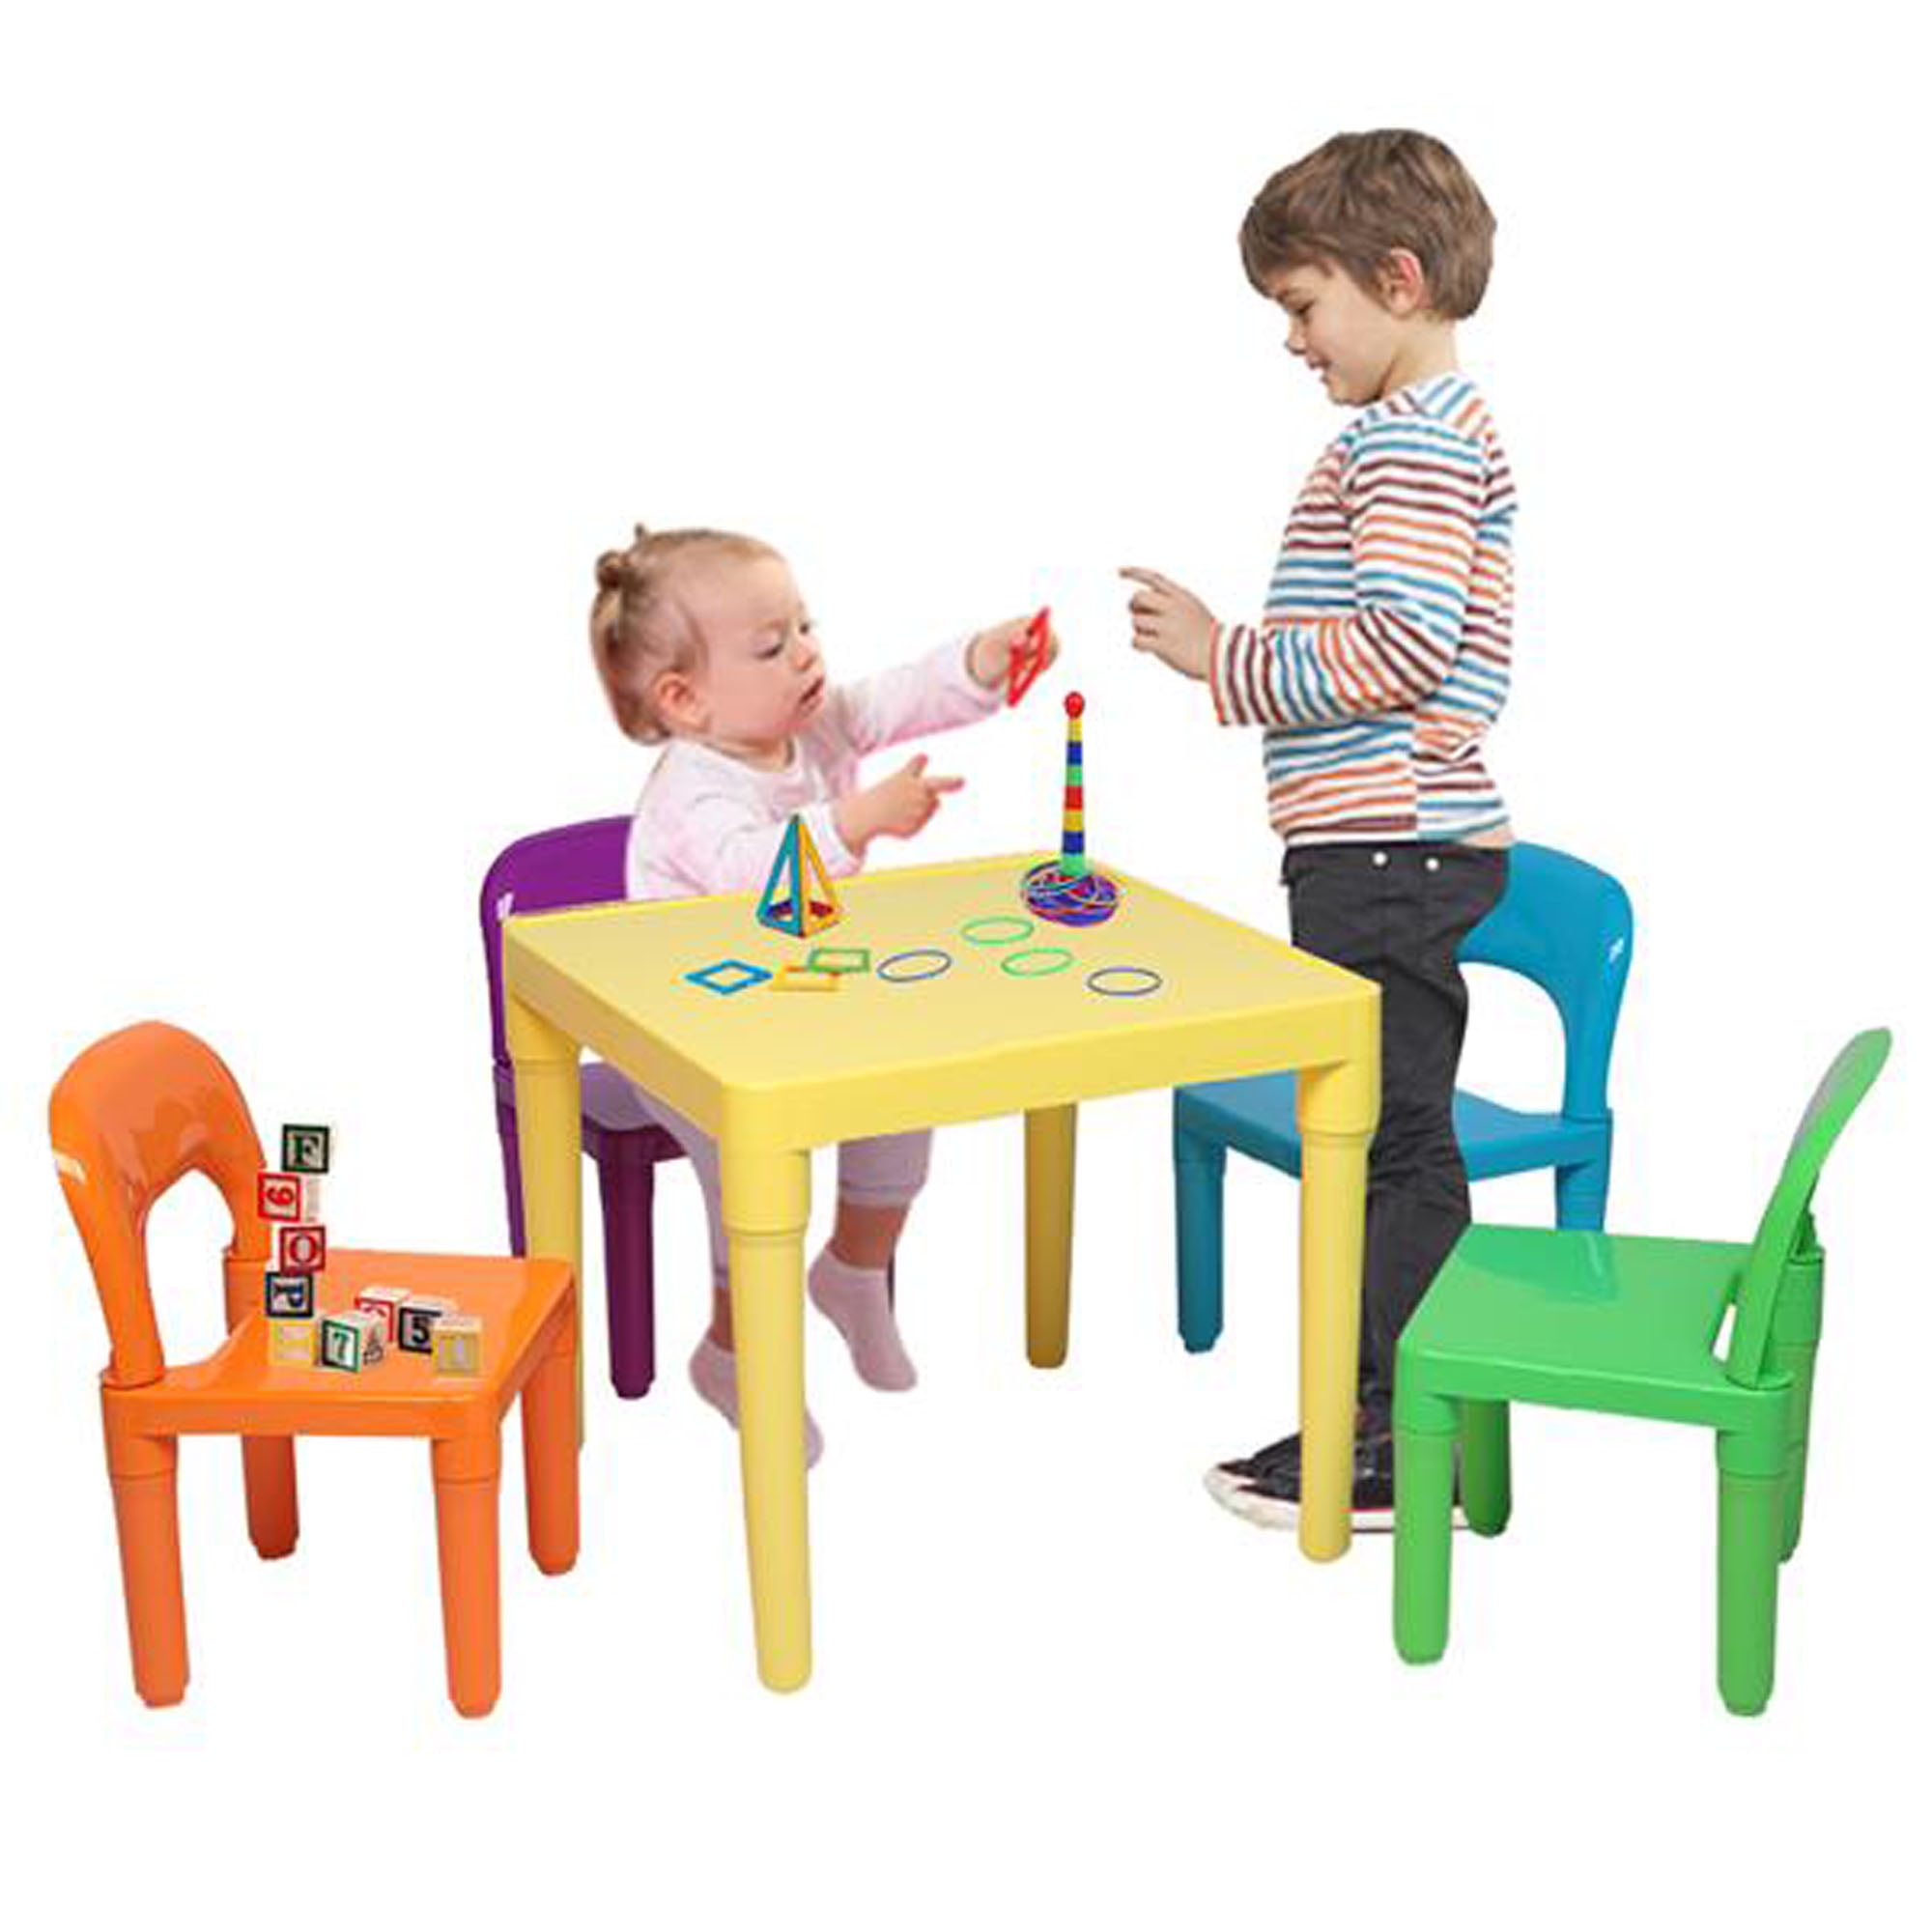 Little Tikes Bright 'n Bold Table & Chairs, Green/Blue - Walmart.com